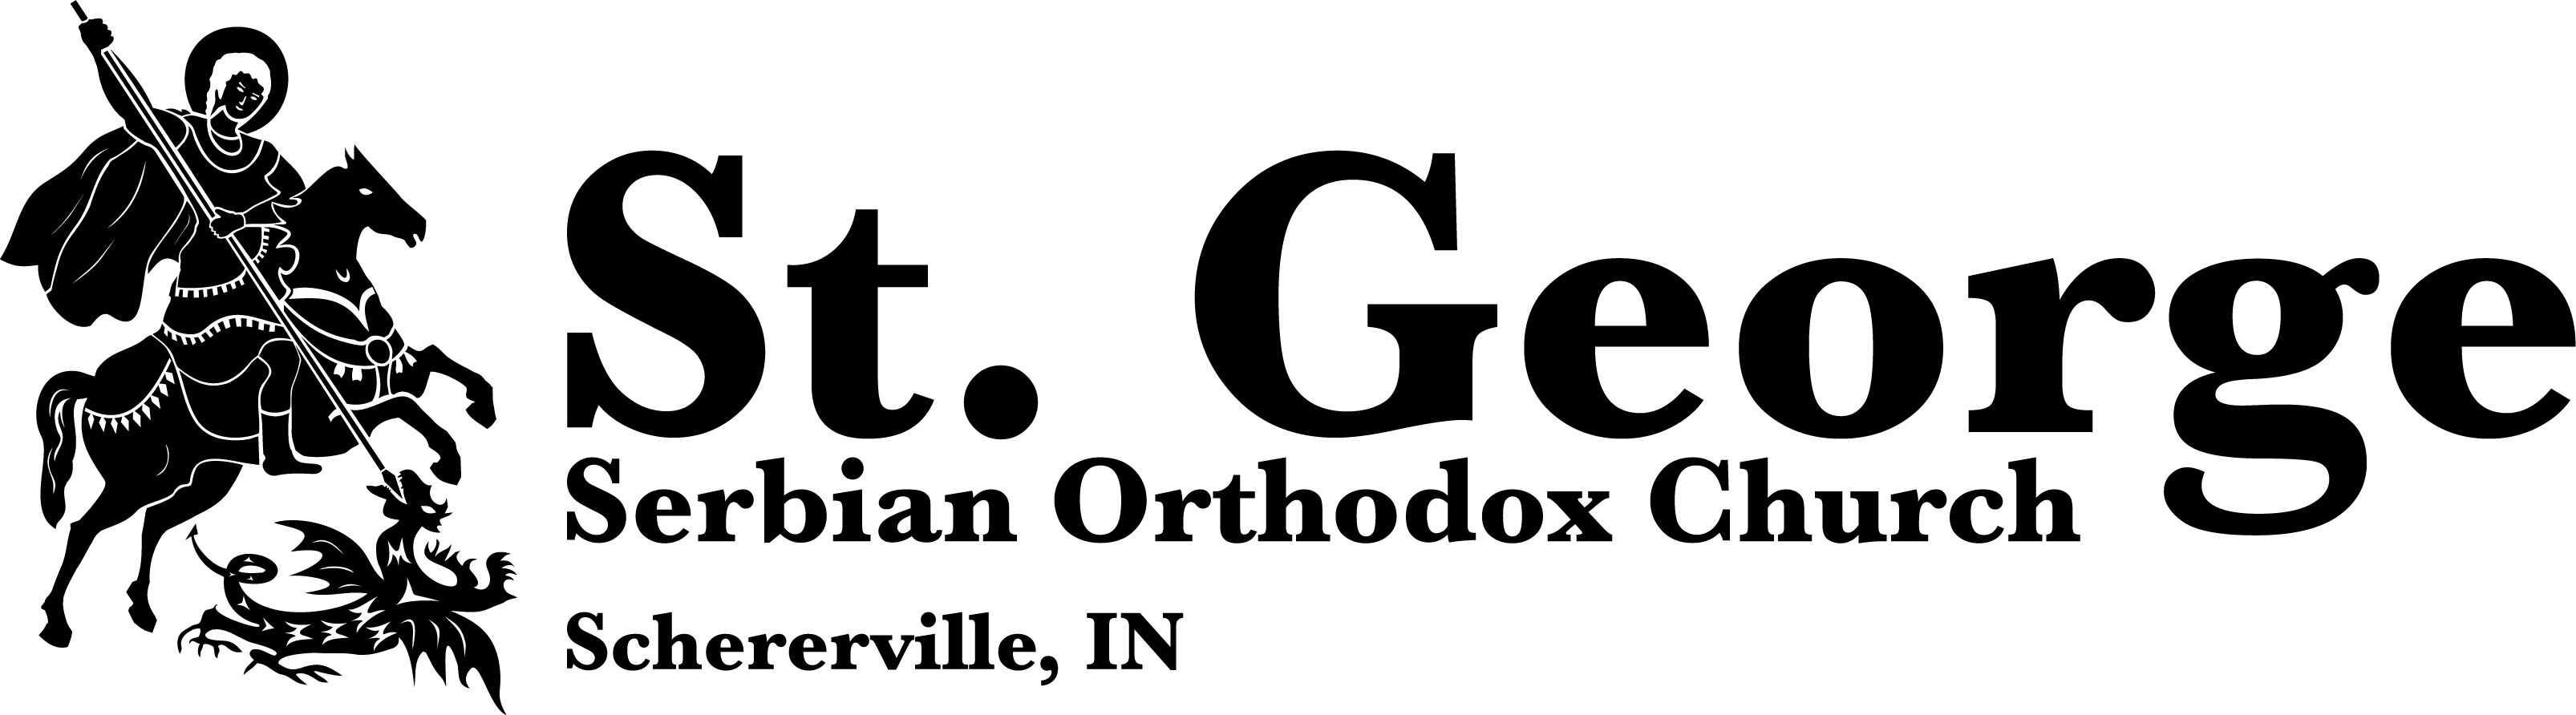 St george logo